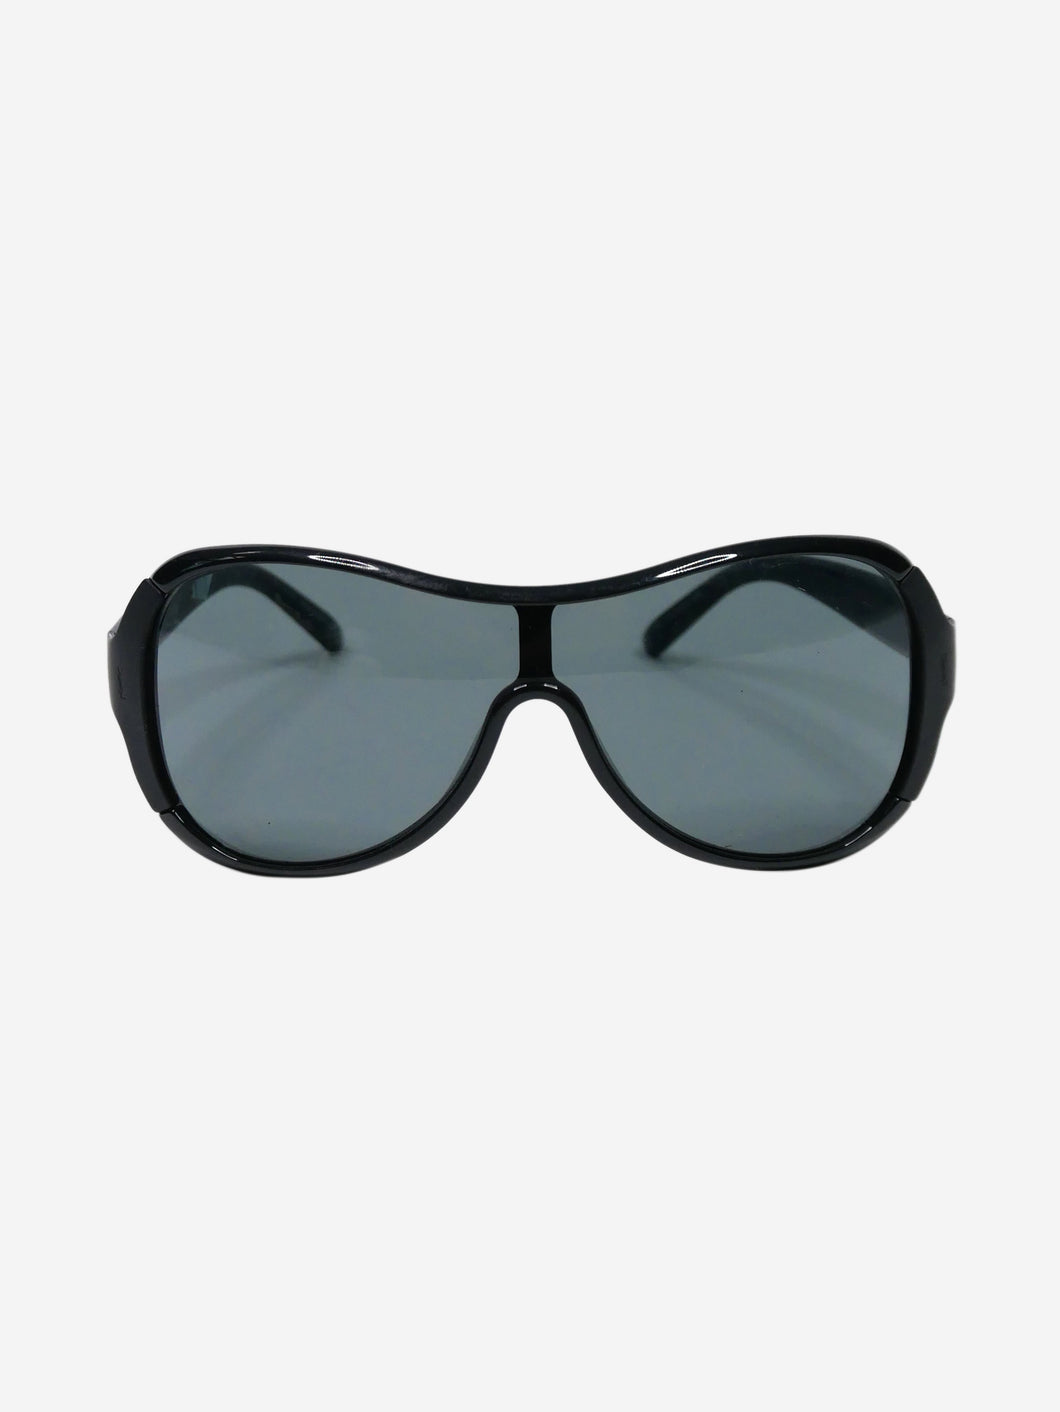 Saint Laurent Black oversized sunglasses Sunglasses Saint Laurent 